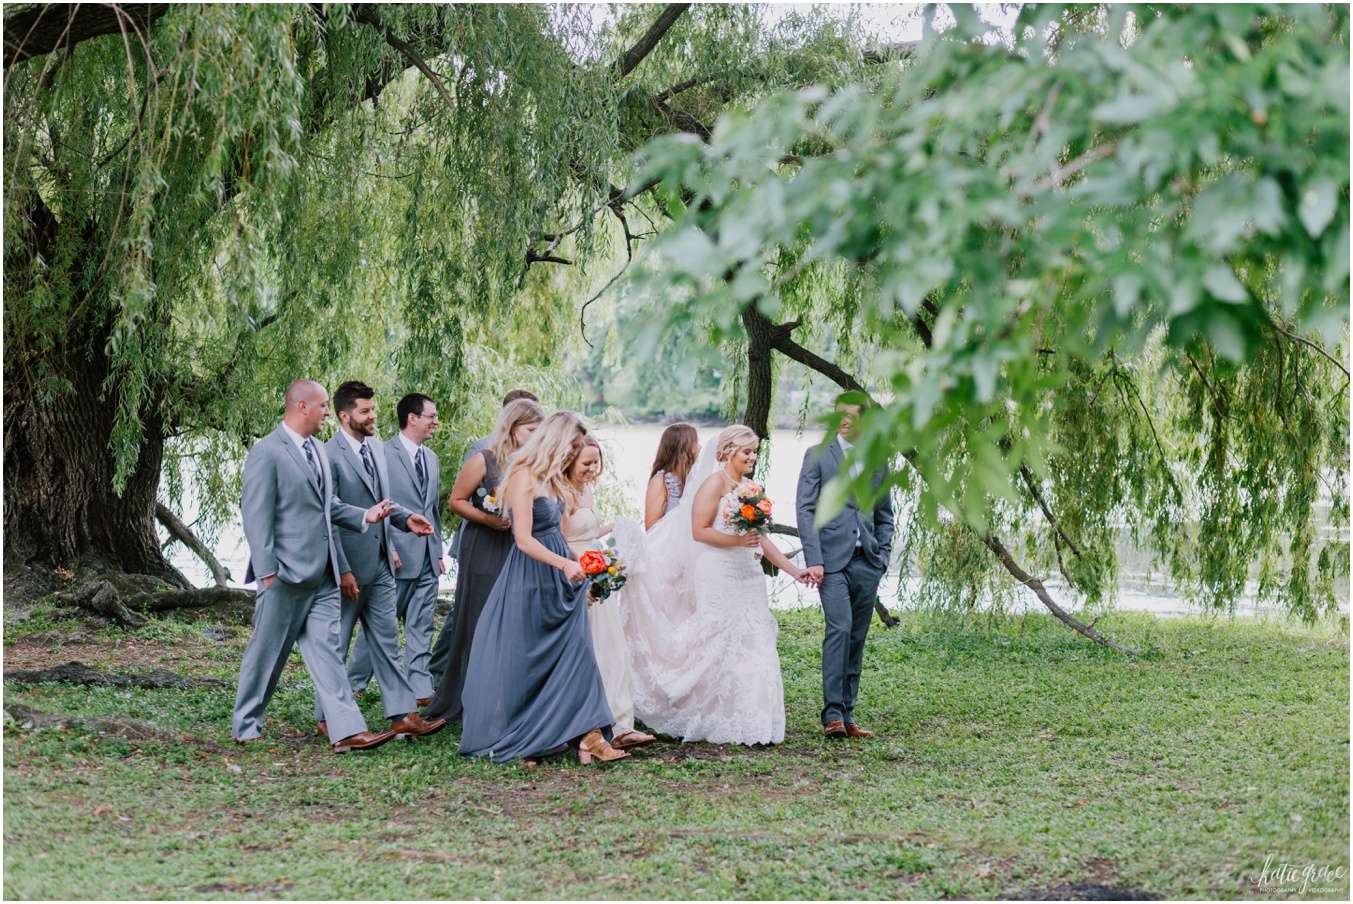 Katie Grace Photography, Riverside Park, Summer Wedding, Goei Center, Gray wedding